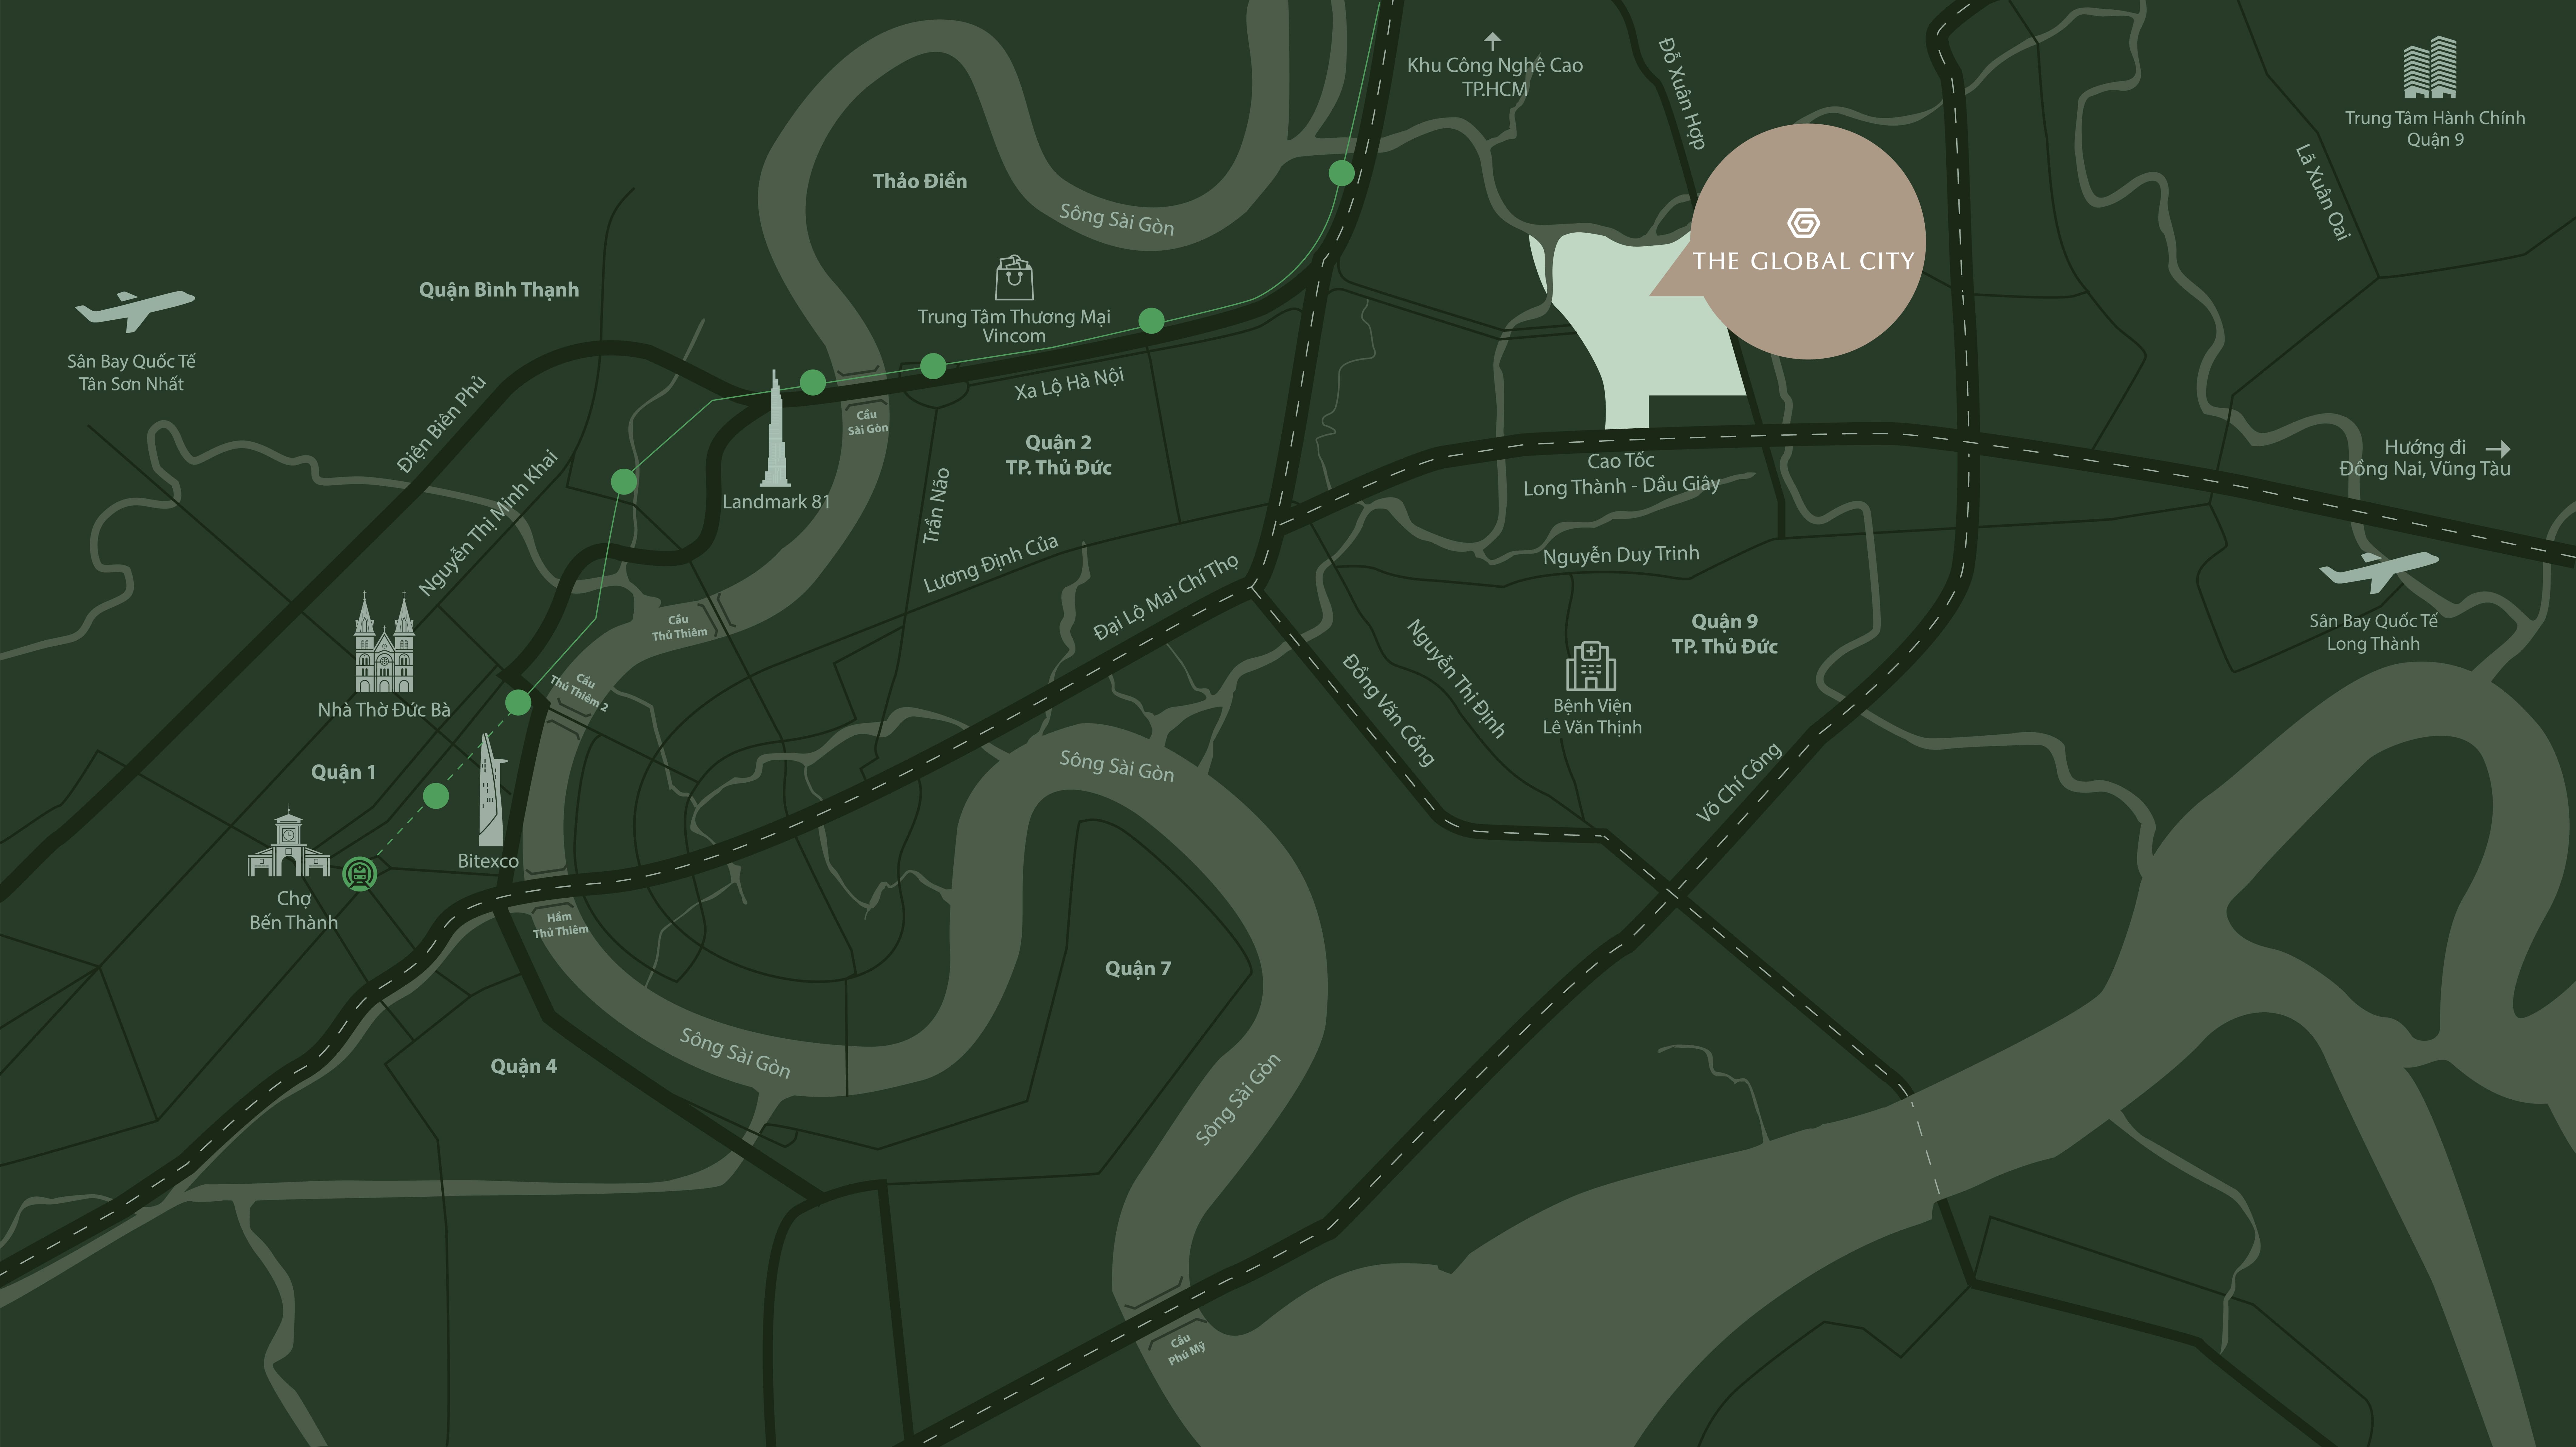 tgc_location-map_vn.jpg